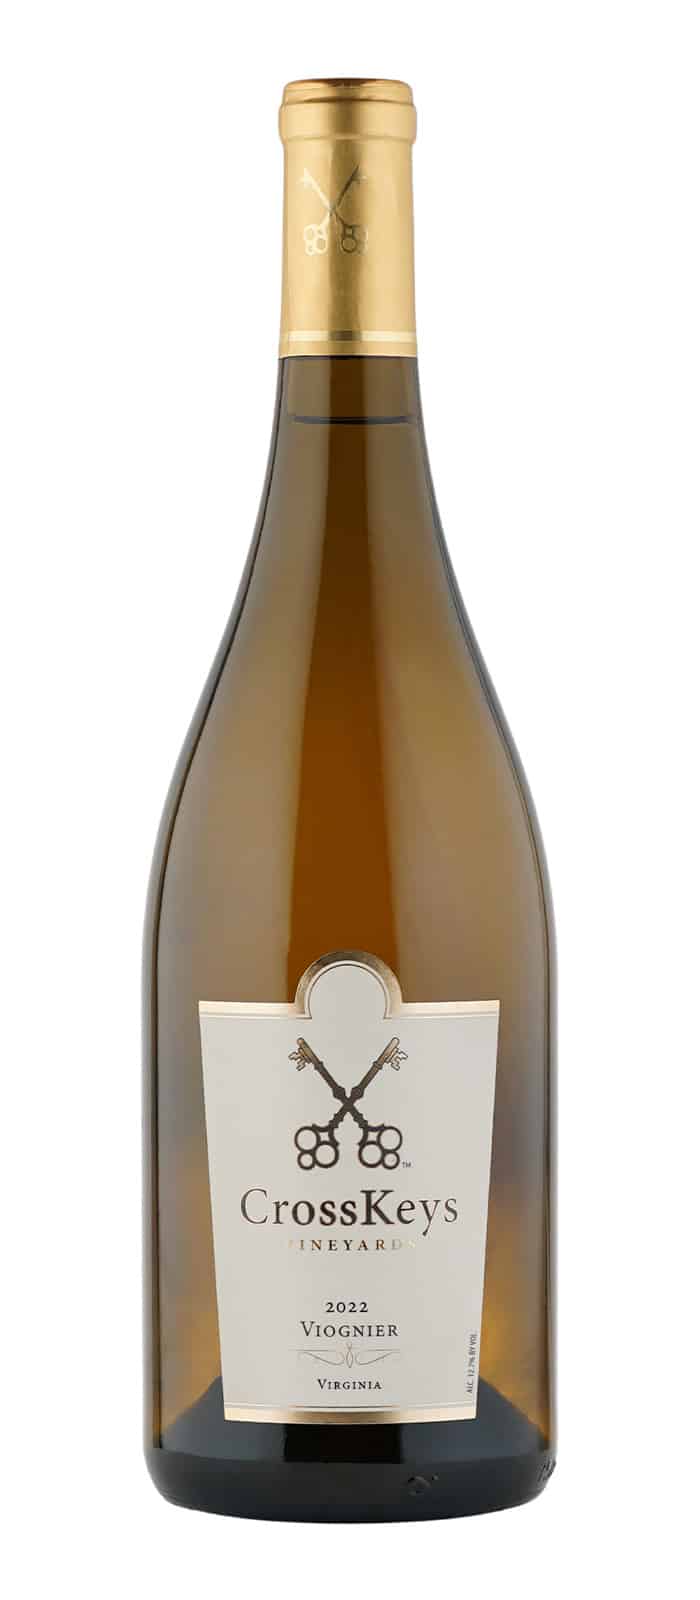 Bottle of CrossKeys Vineyards 2022 Viognier, Gold Medal, Virginia Governor's Cup Wine Competition.